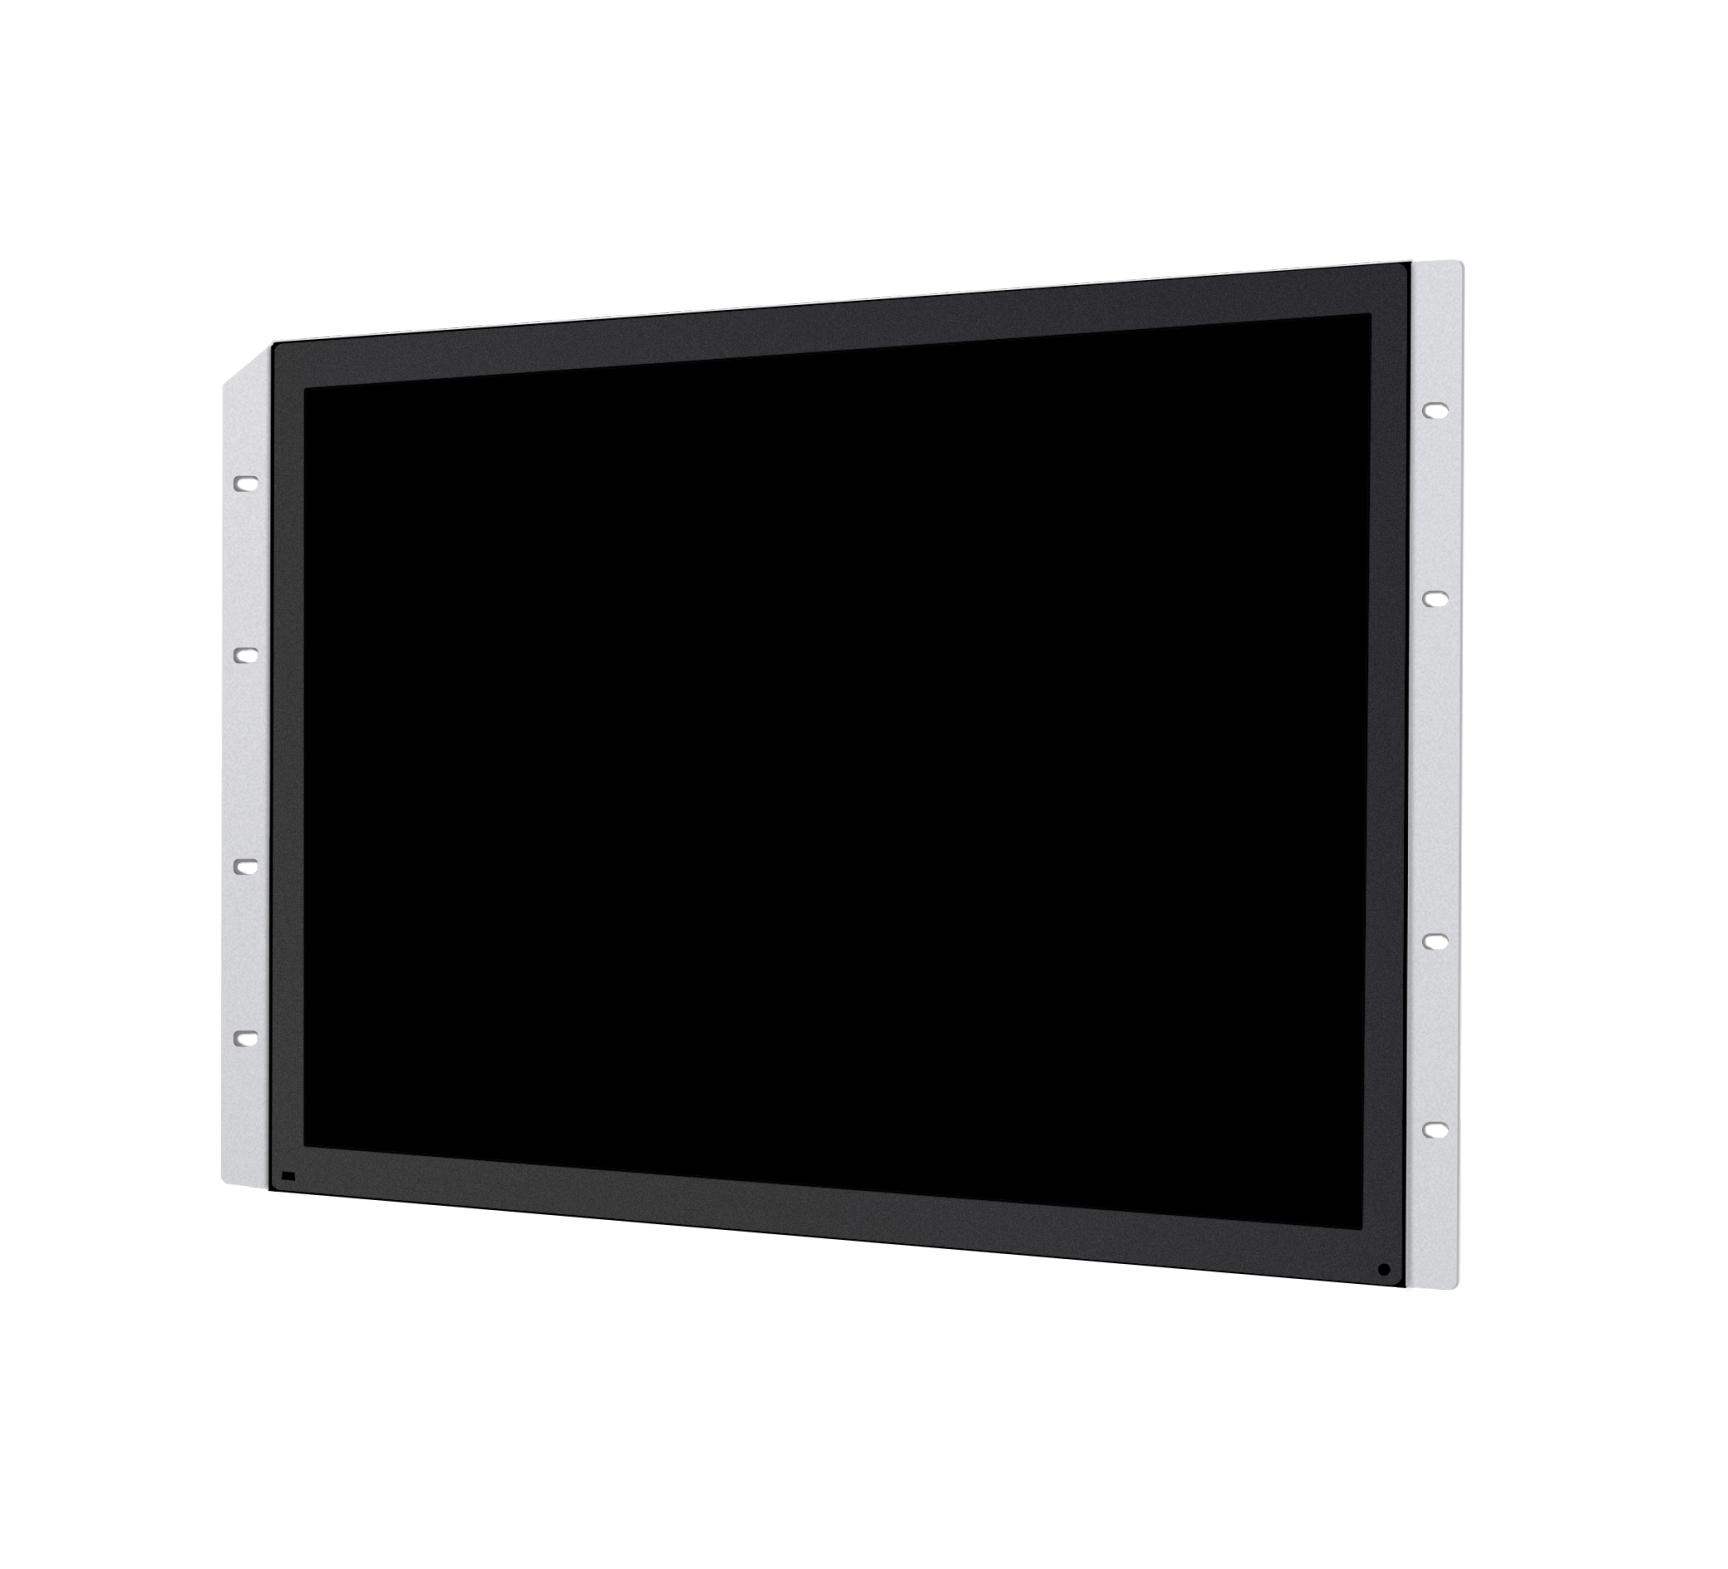 ULM19 UNICO PHOENIX SERIES OF ARCADE CRT REPLACEMENT LCD MONITORS